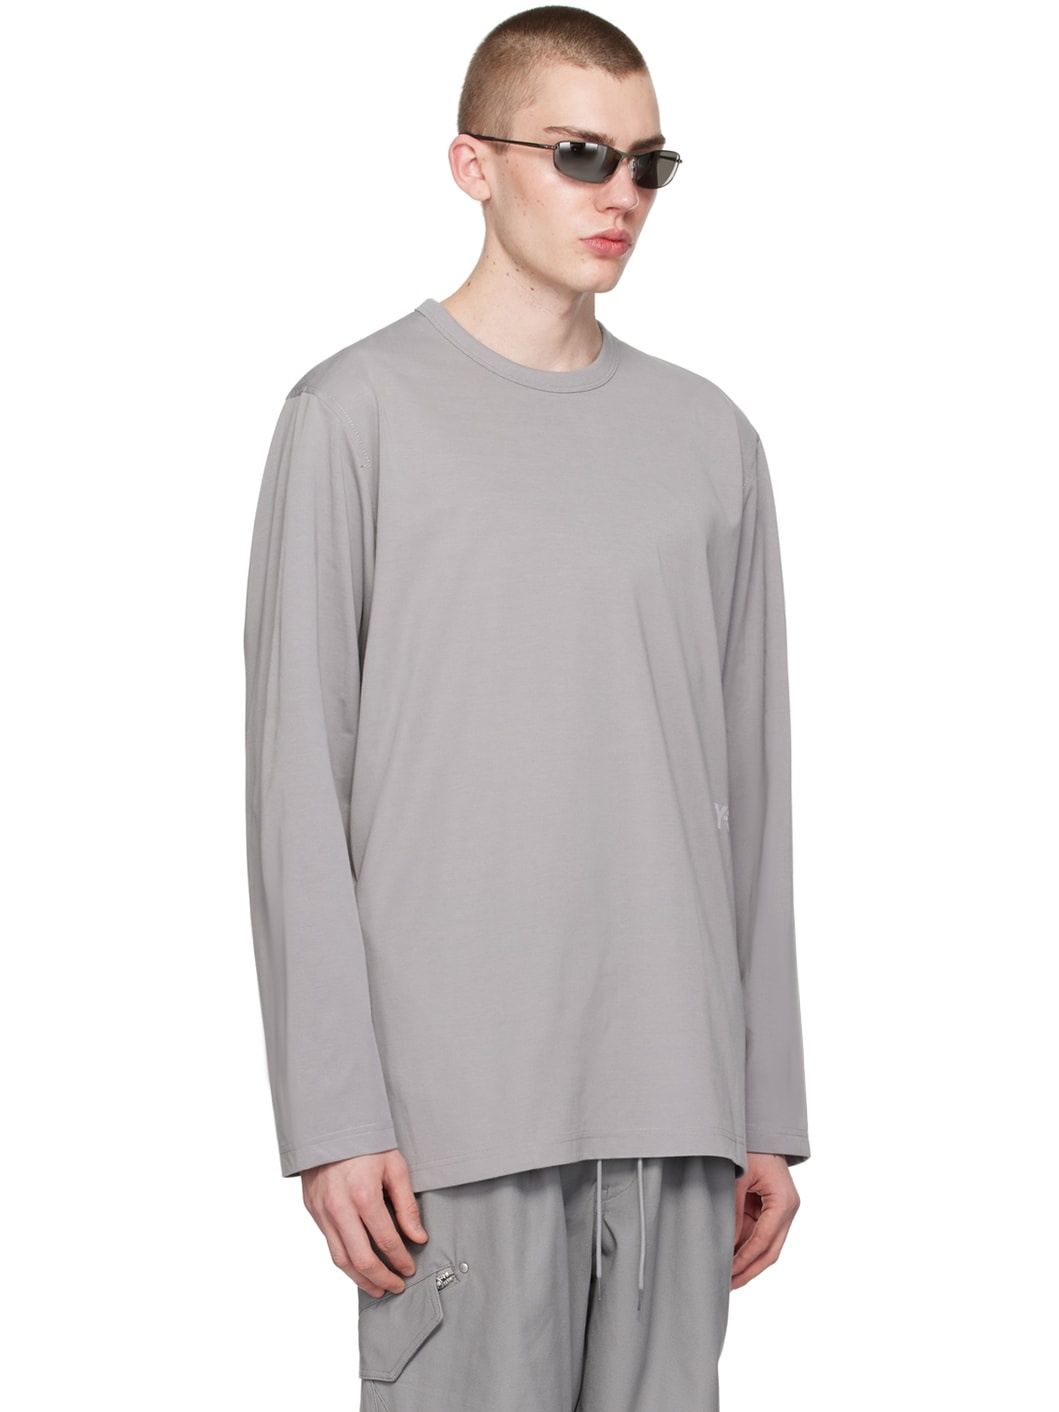 Gray Premium Long Sleeve T-Shirt - 2